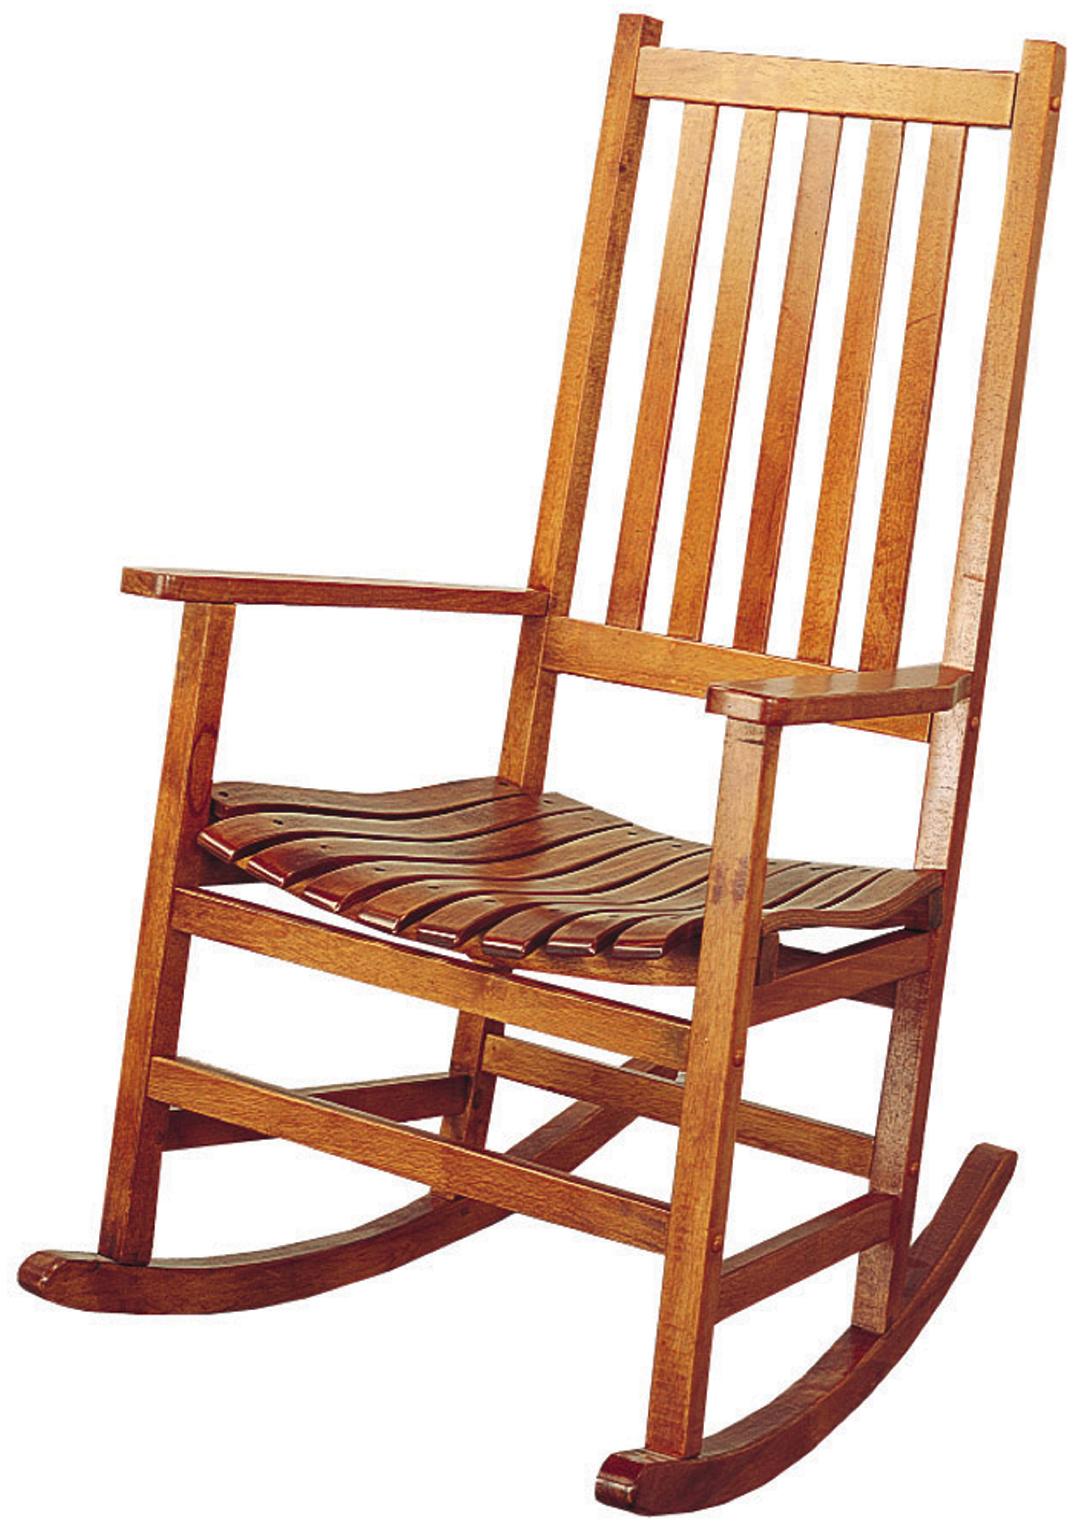 Wooden chair clipart 